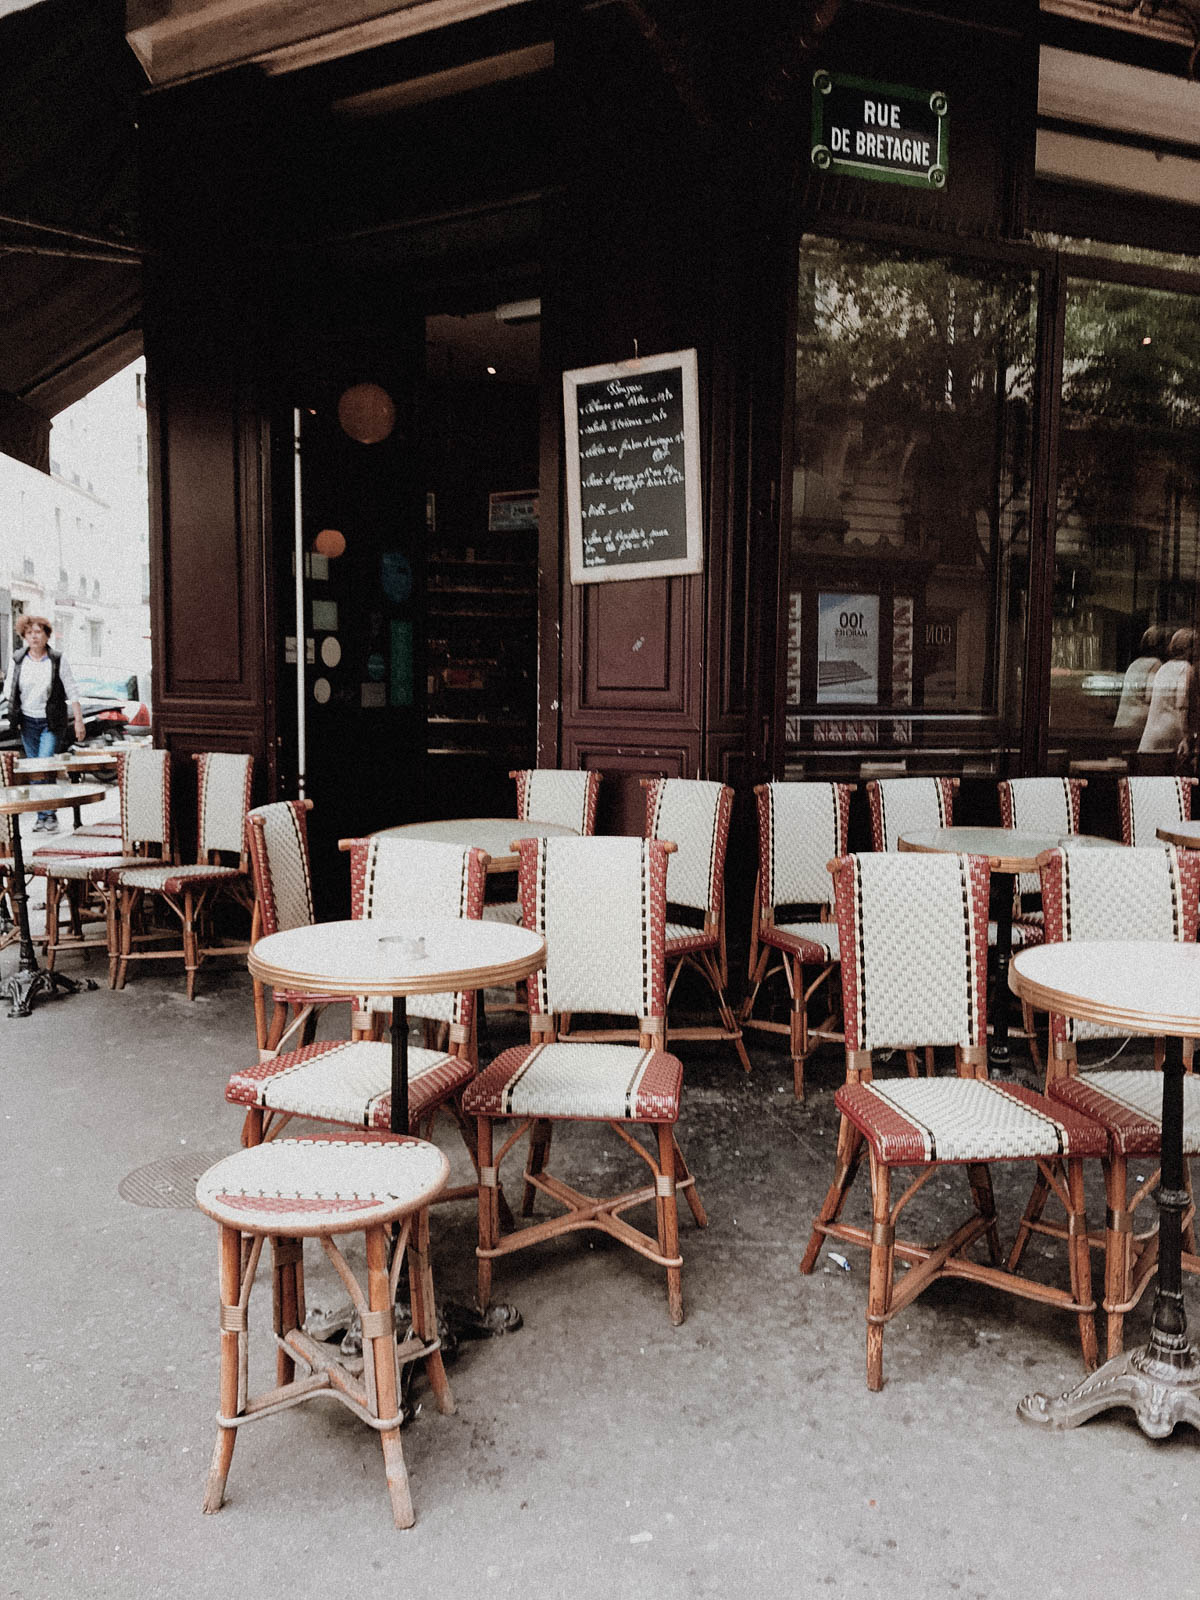 Paris France Travel Guide Architecture Cafes Rg Daily Blog